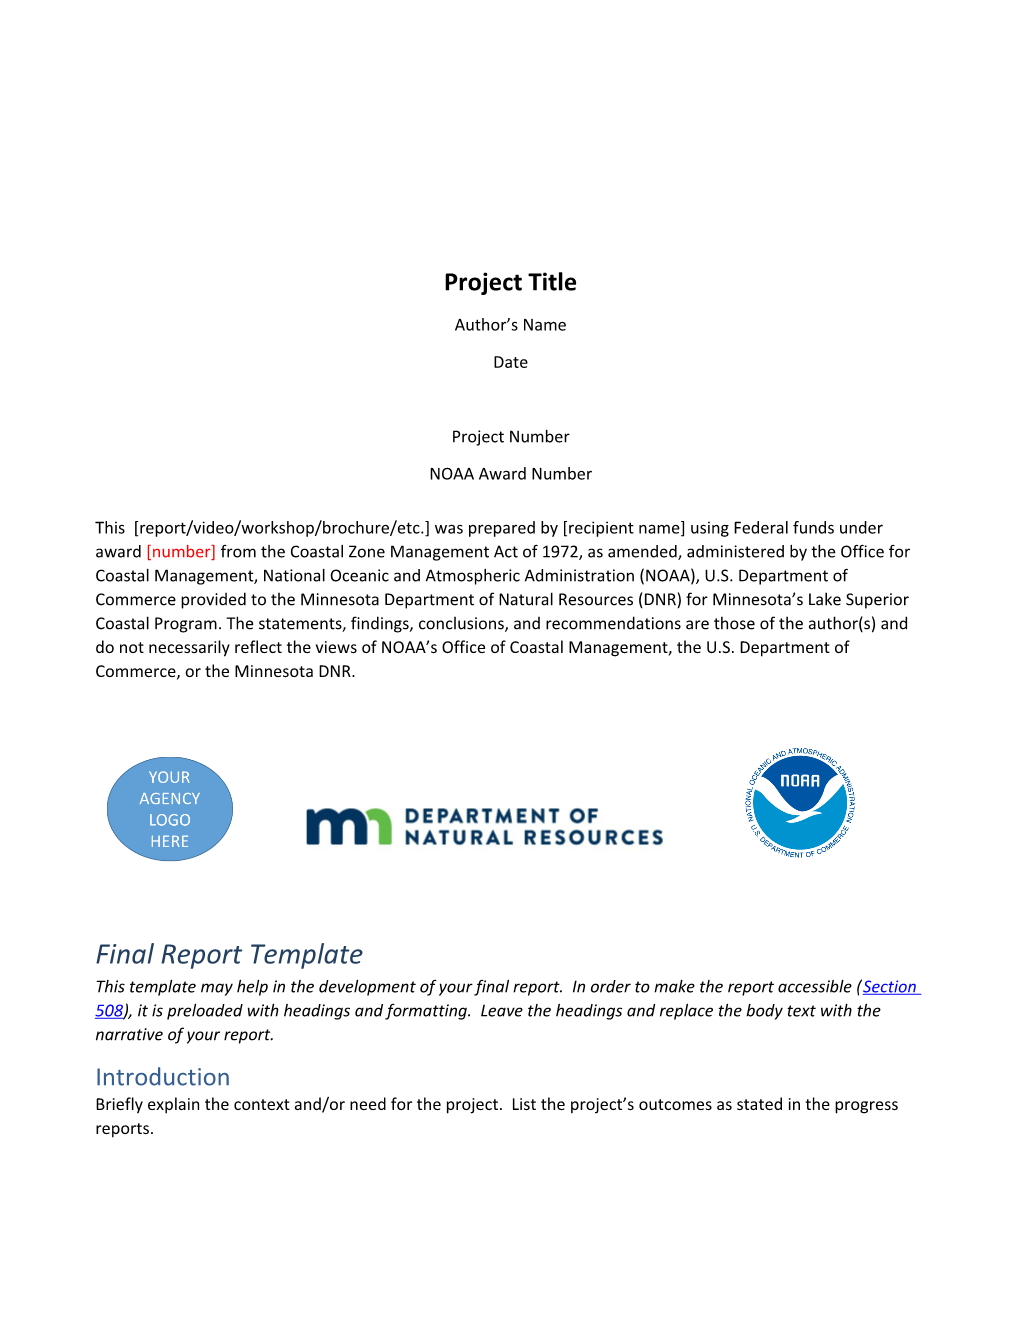 MN Coastal Program Final Report Template